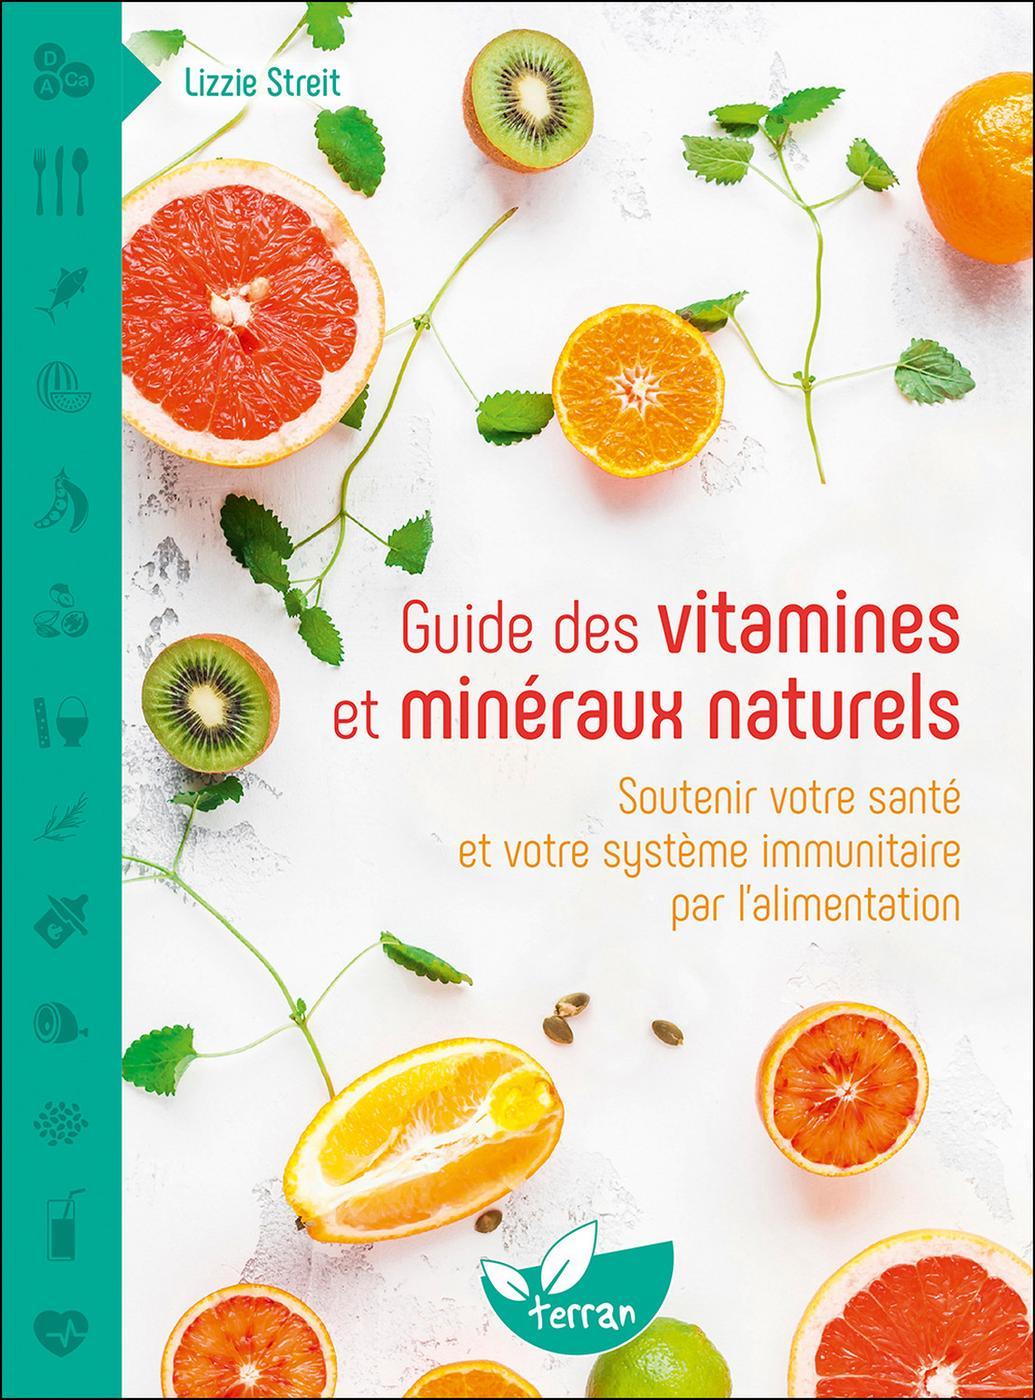 Poster Vitamines et Sels Minéraux